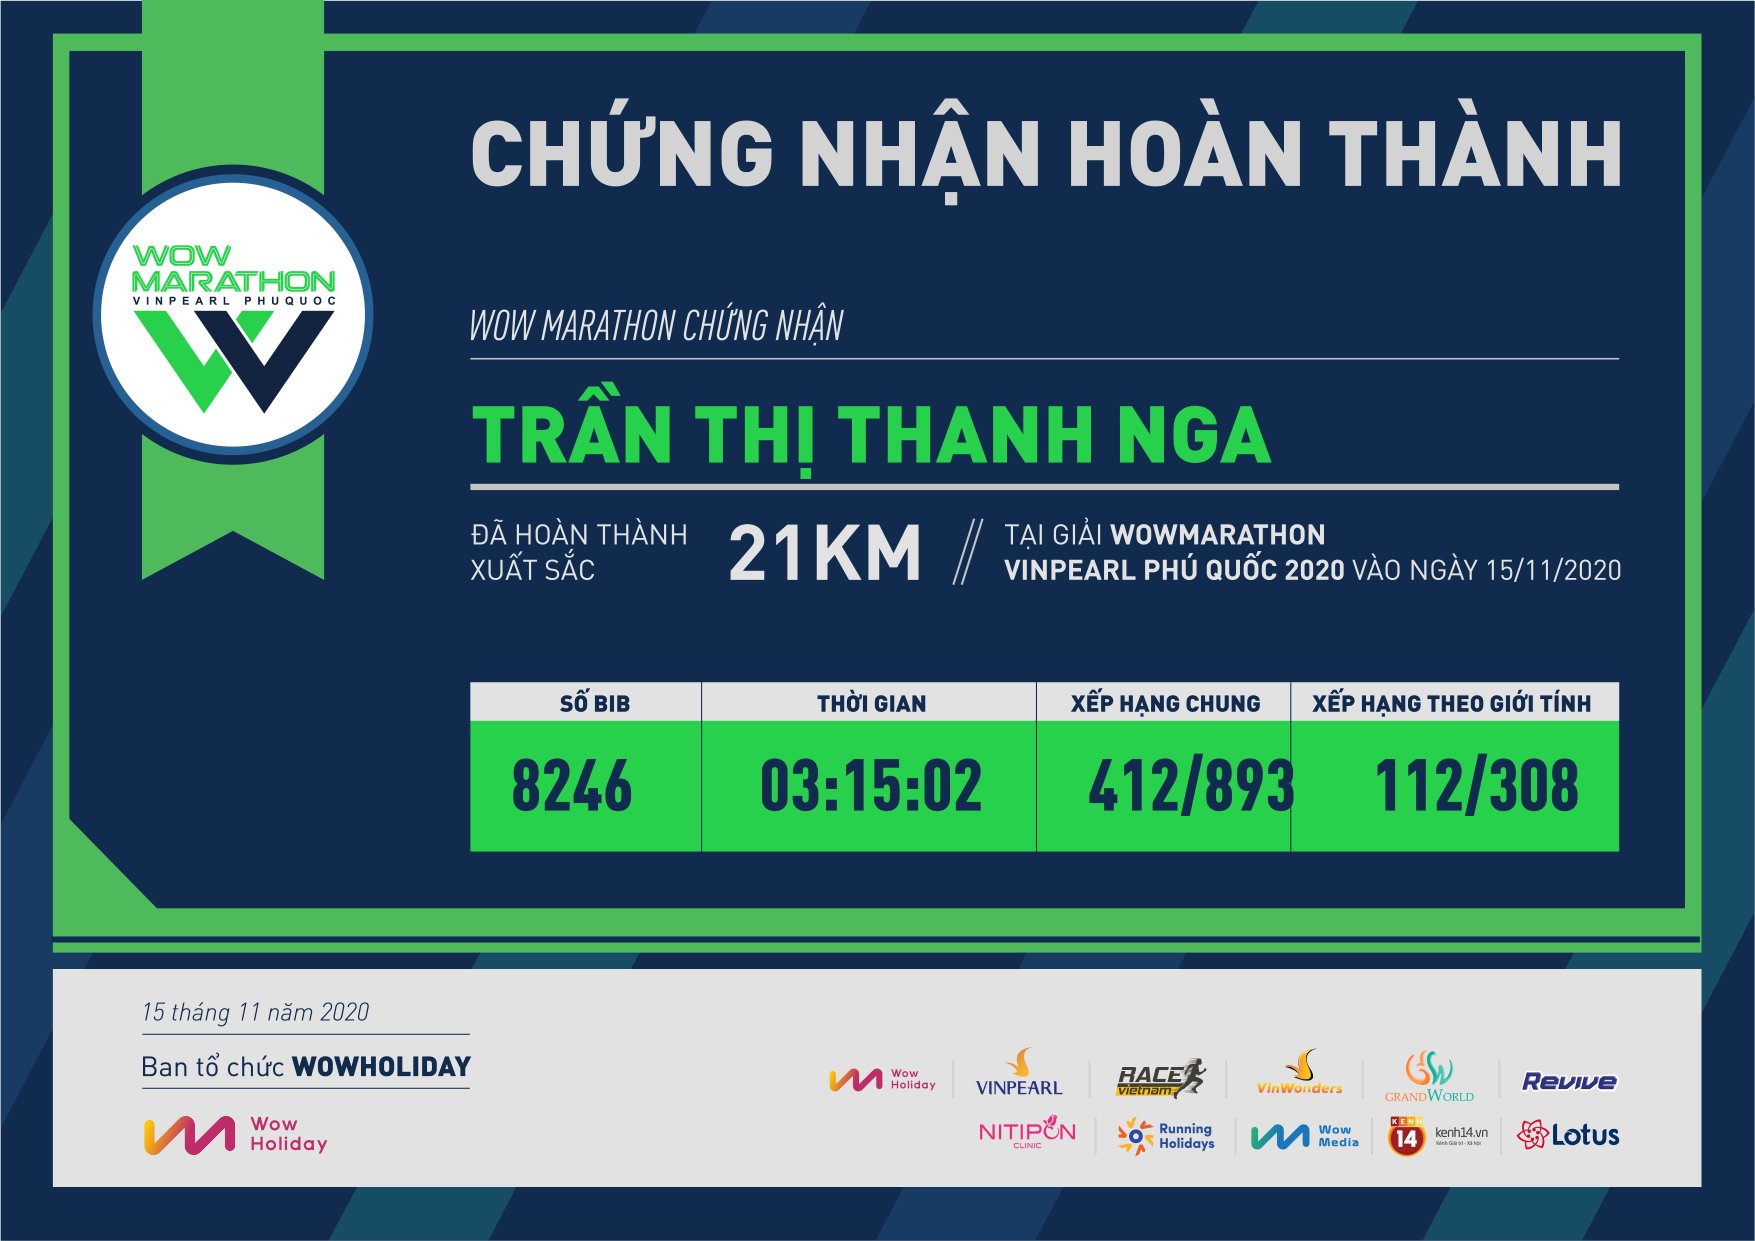 8246 - Trần Thị Thanh Nga